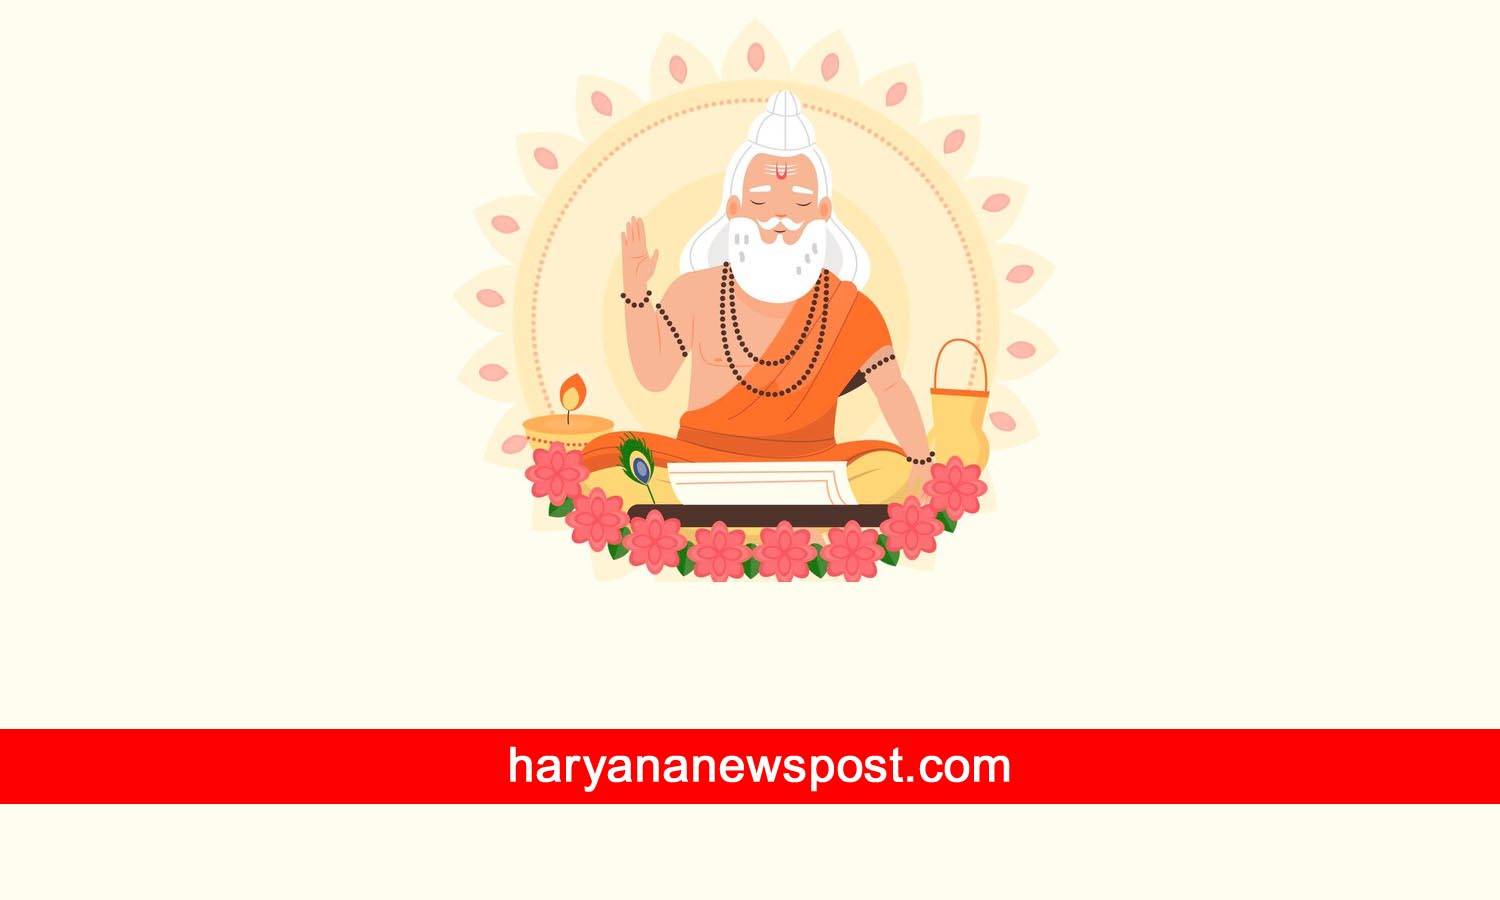 Happy Maharishi Valmiki Jayanti Wishes Images, Quotes, Status, Messages, Photos